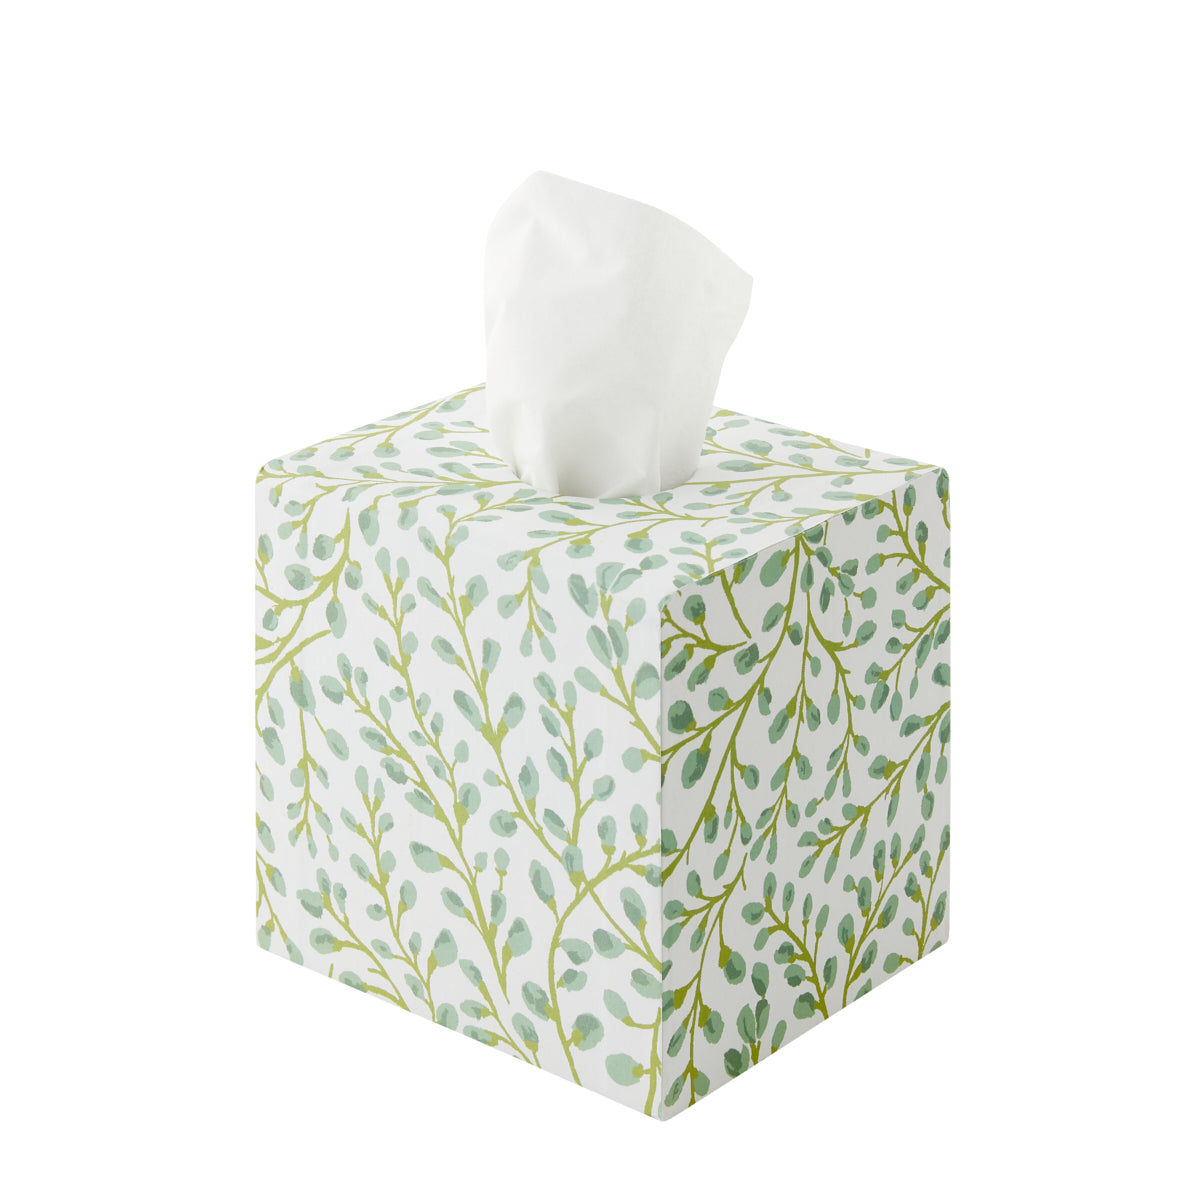 Nina Campbell Tissue Box All Over Buds - Aqua